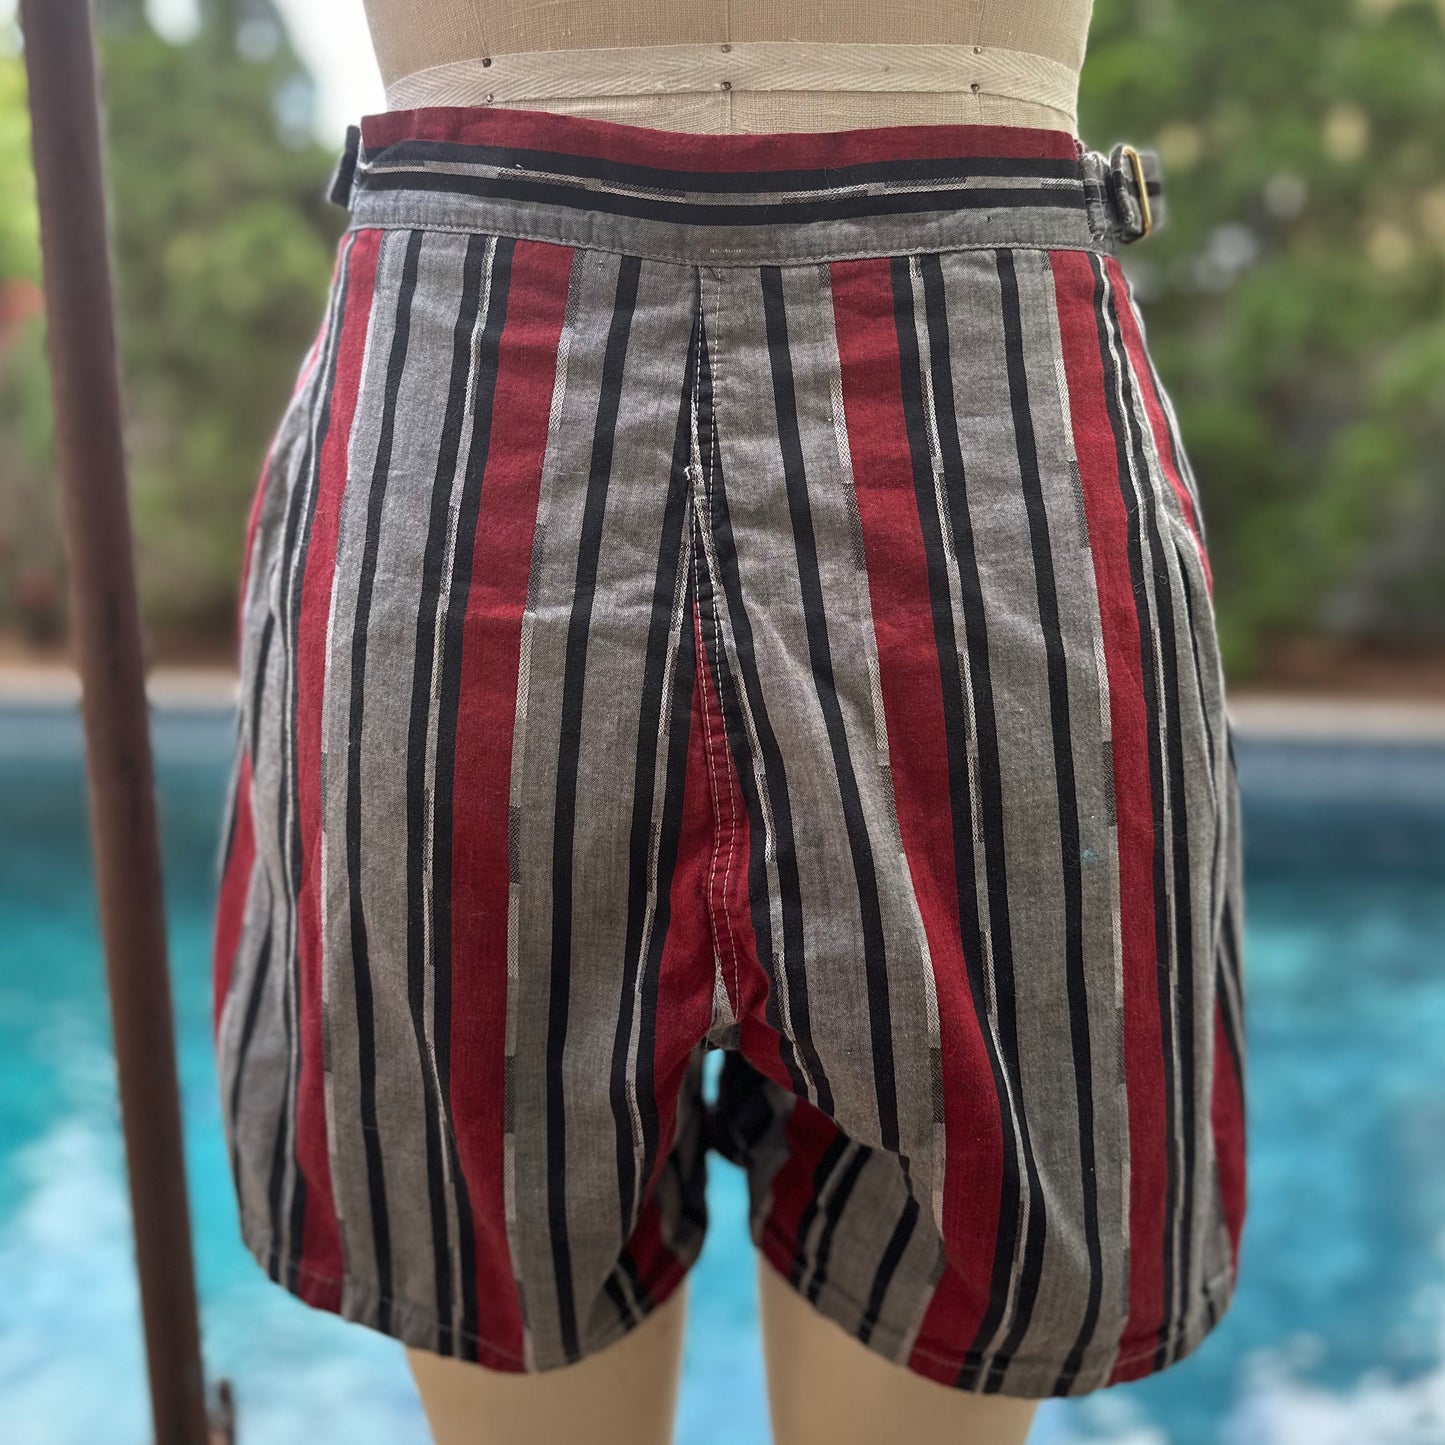 1950s 1960s Men’s Striped Swim Trunks, Jantzen Cotton Swimsuit Size Medium, High Waisted